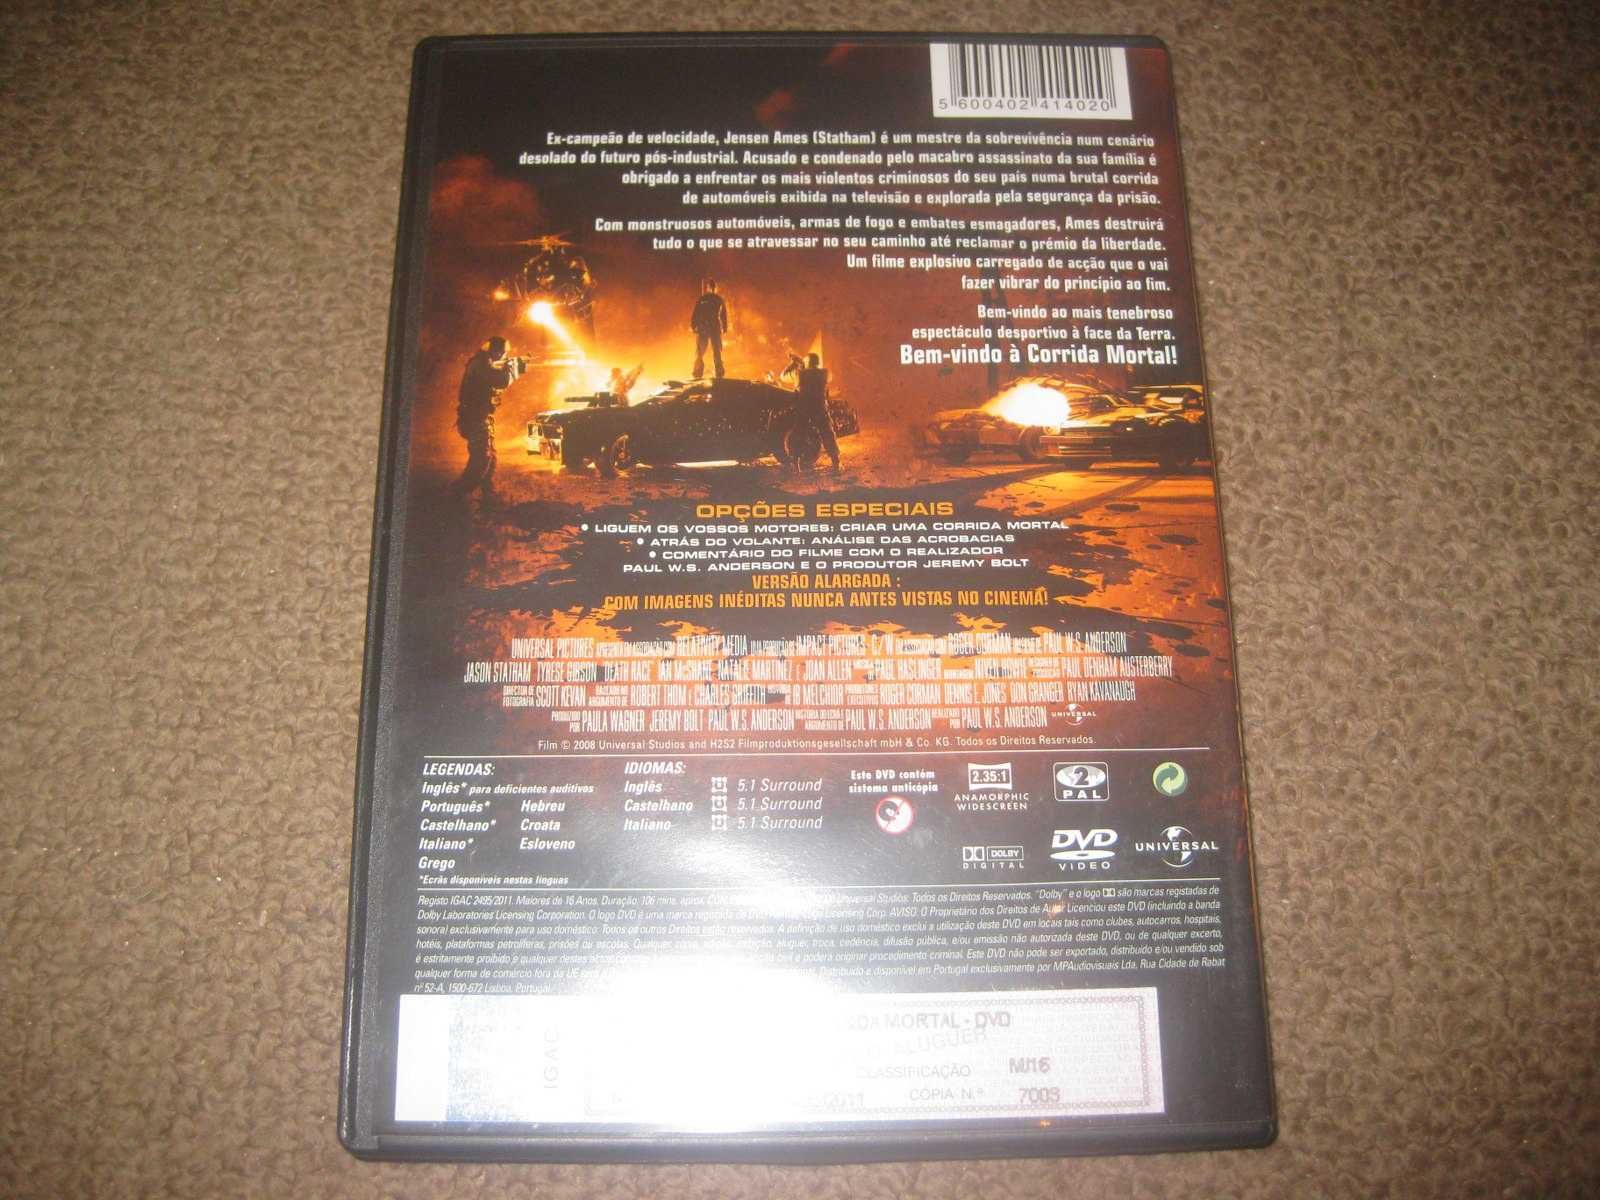 DVD "Corrida Mortal" com Jason Statham